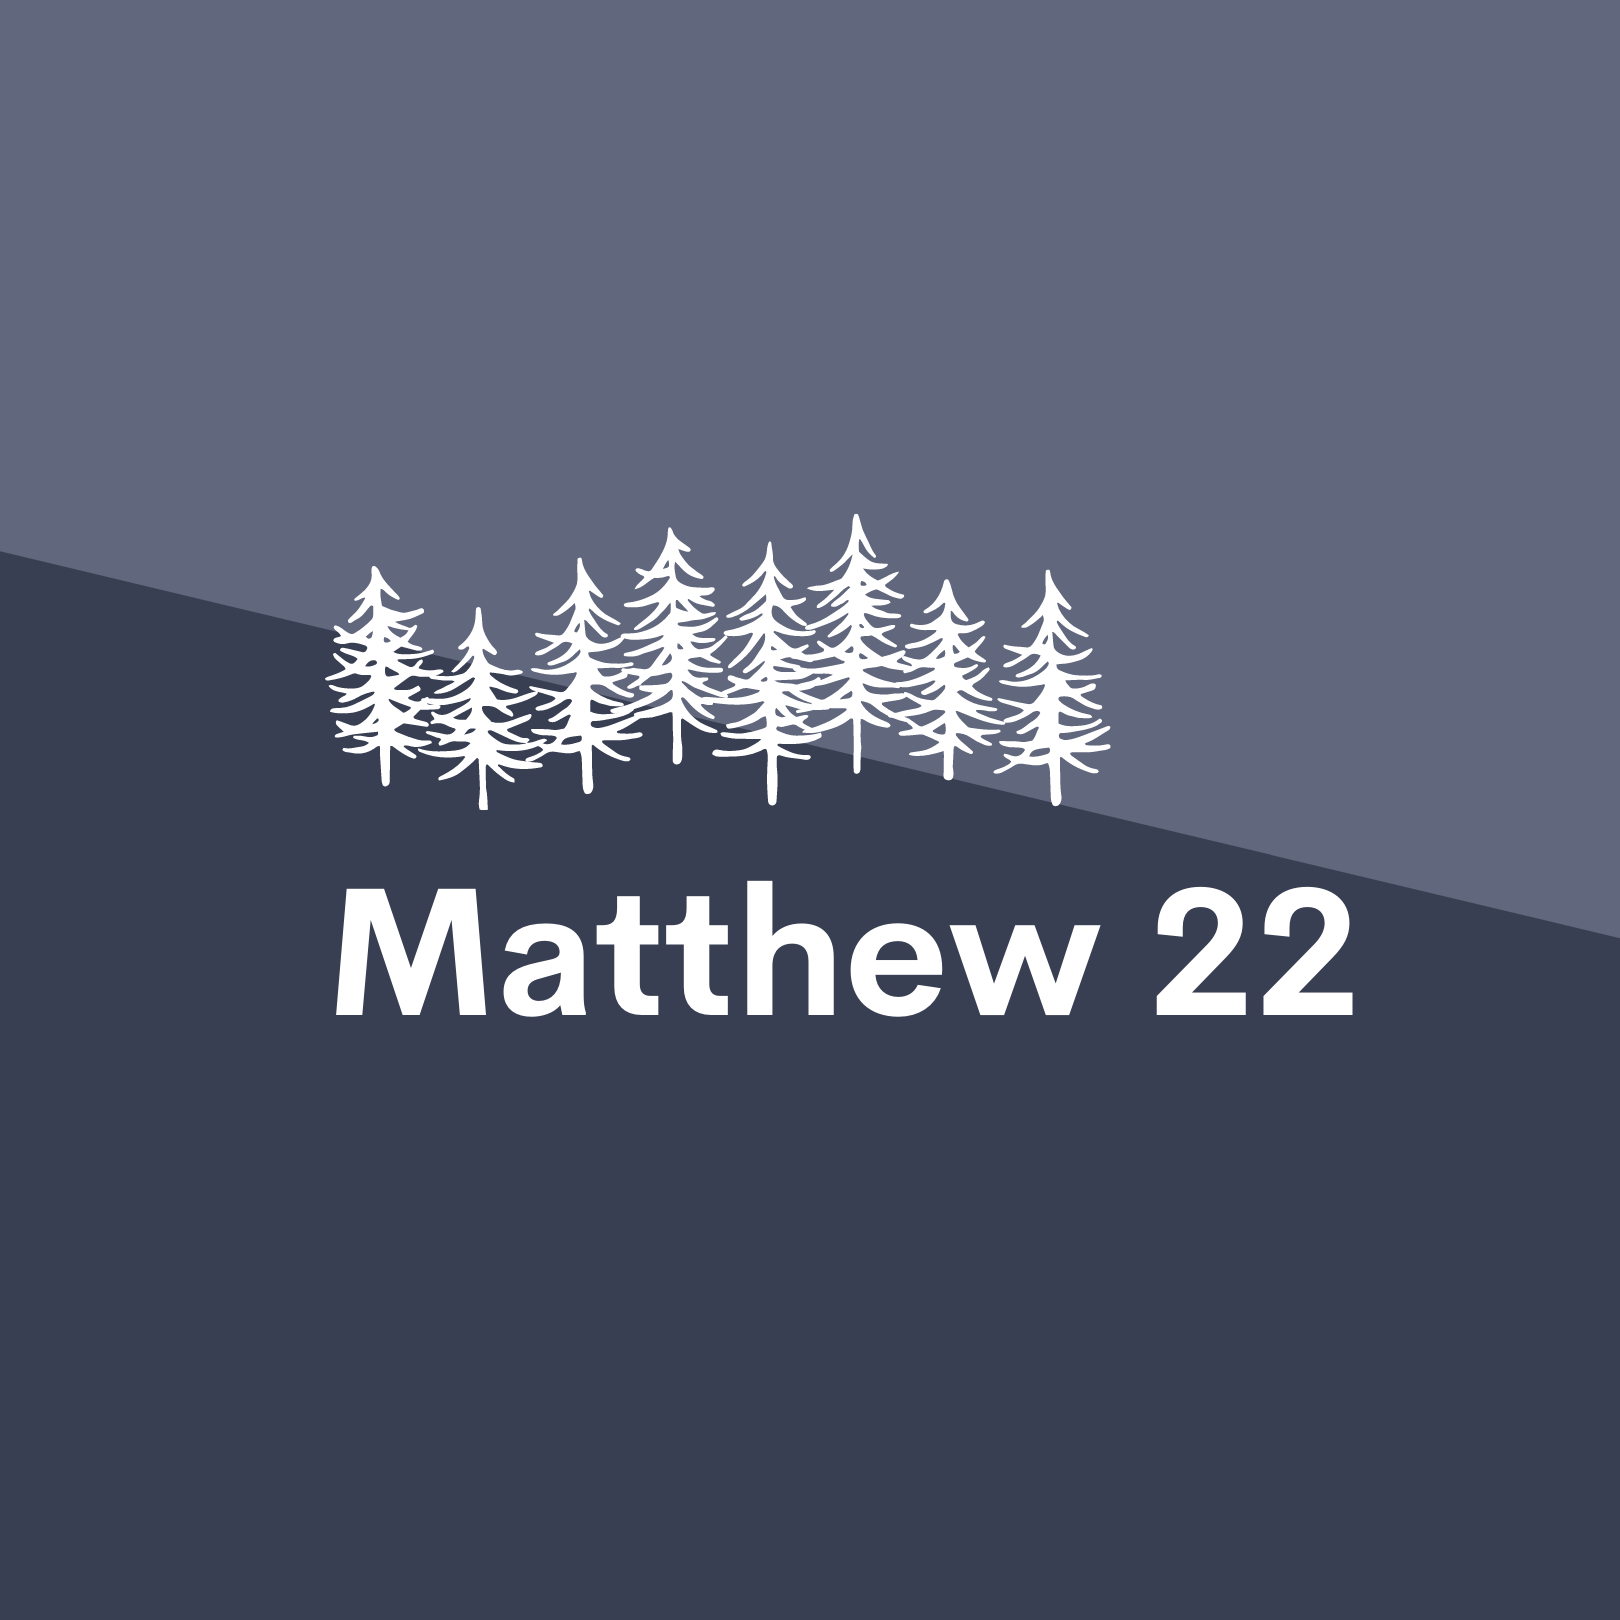 Feb 2: Matthew 22